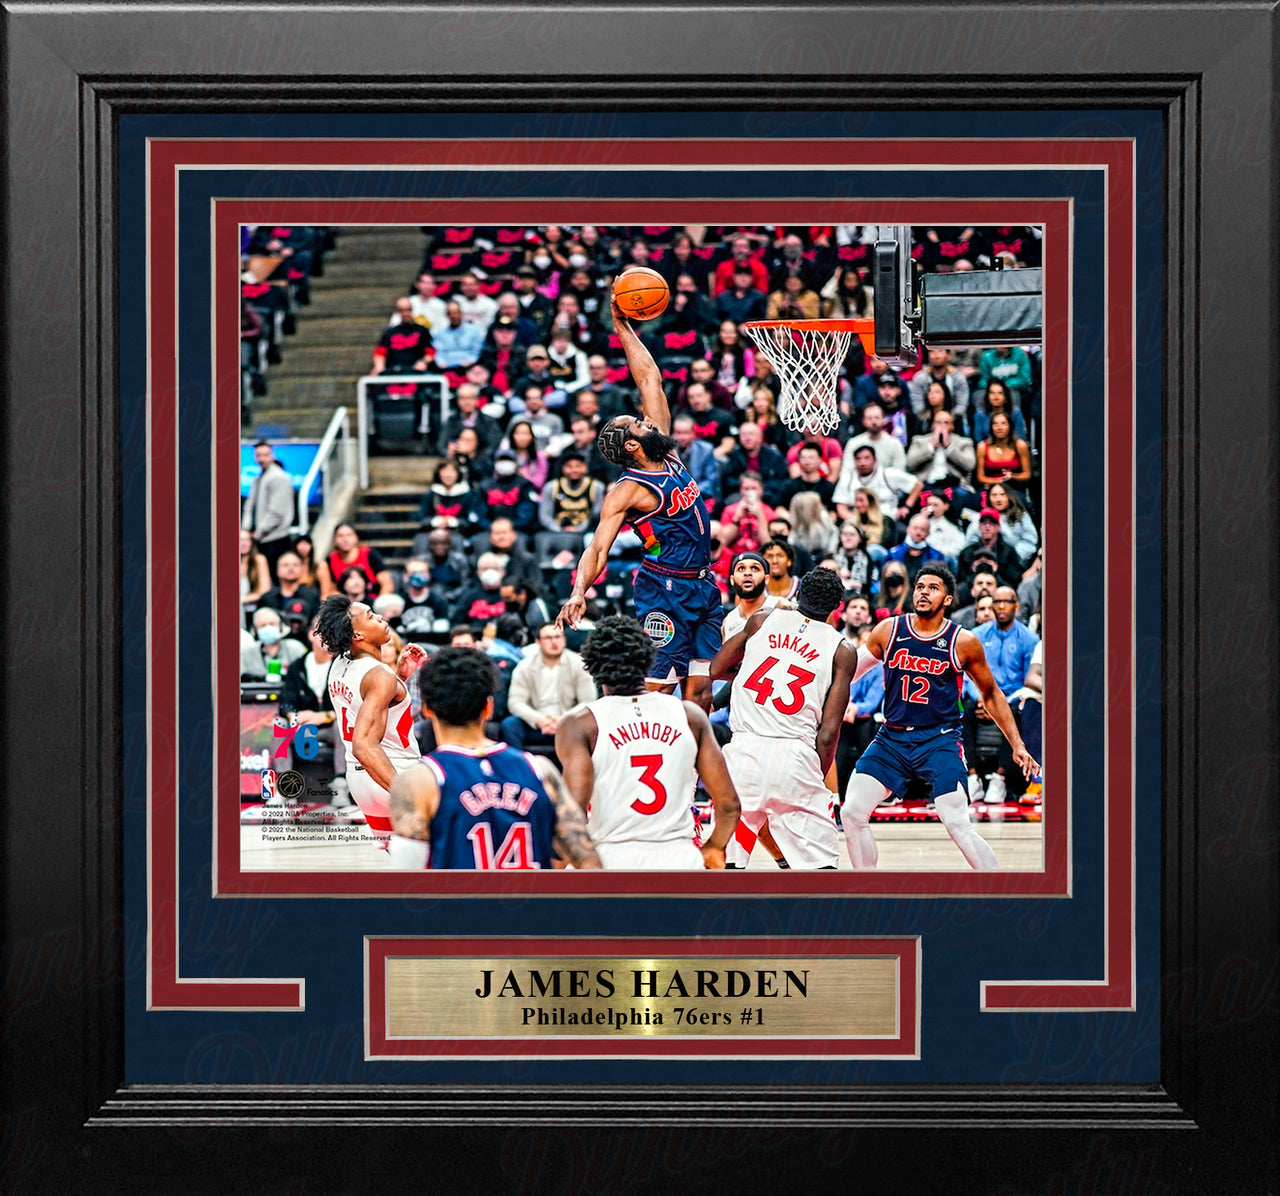 James Harden in Action Philadelphia 76ers 8" x 10" Framed Basketball Photo - Dynasty Sports & Framing 